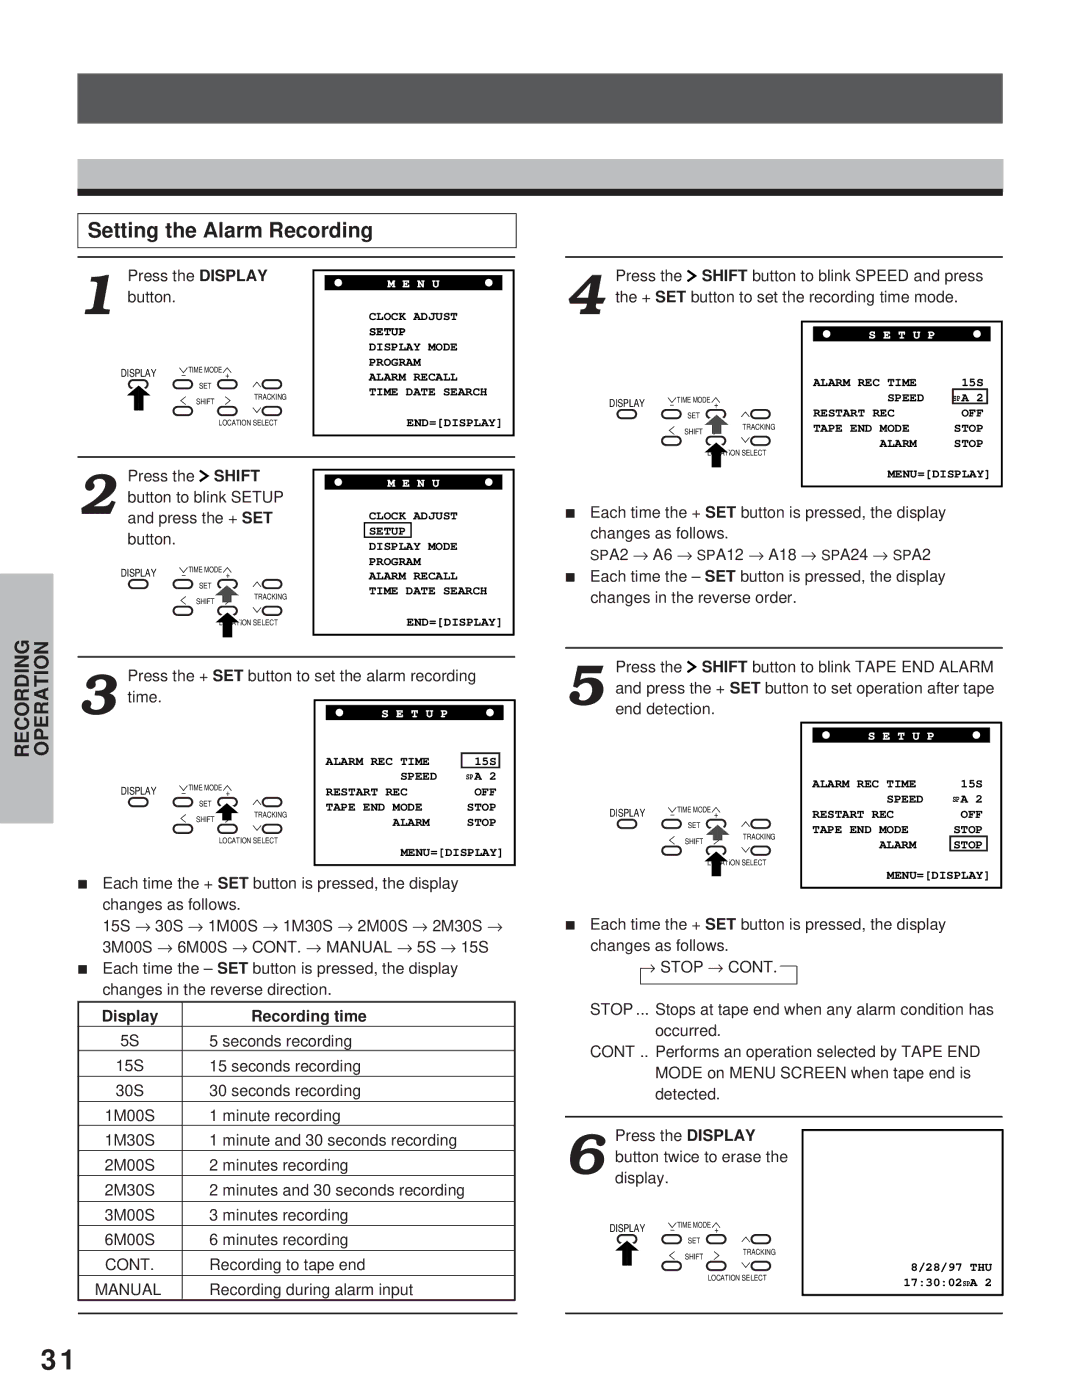 Toshiba kV-9168A instruction manual Setting the Alarm Recording, Display Recording time, Cont, Manual 